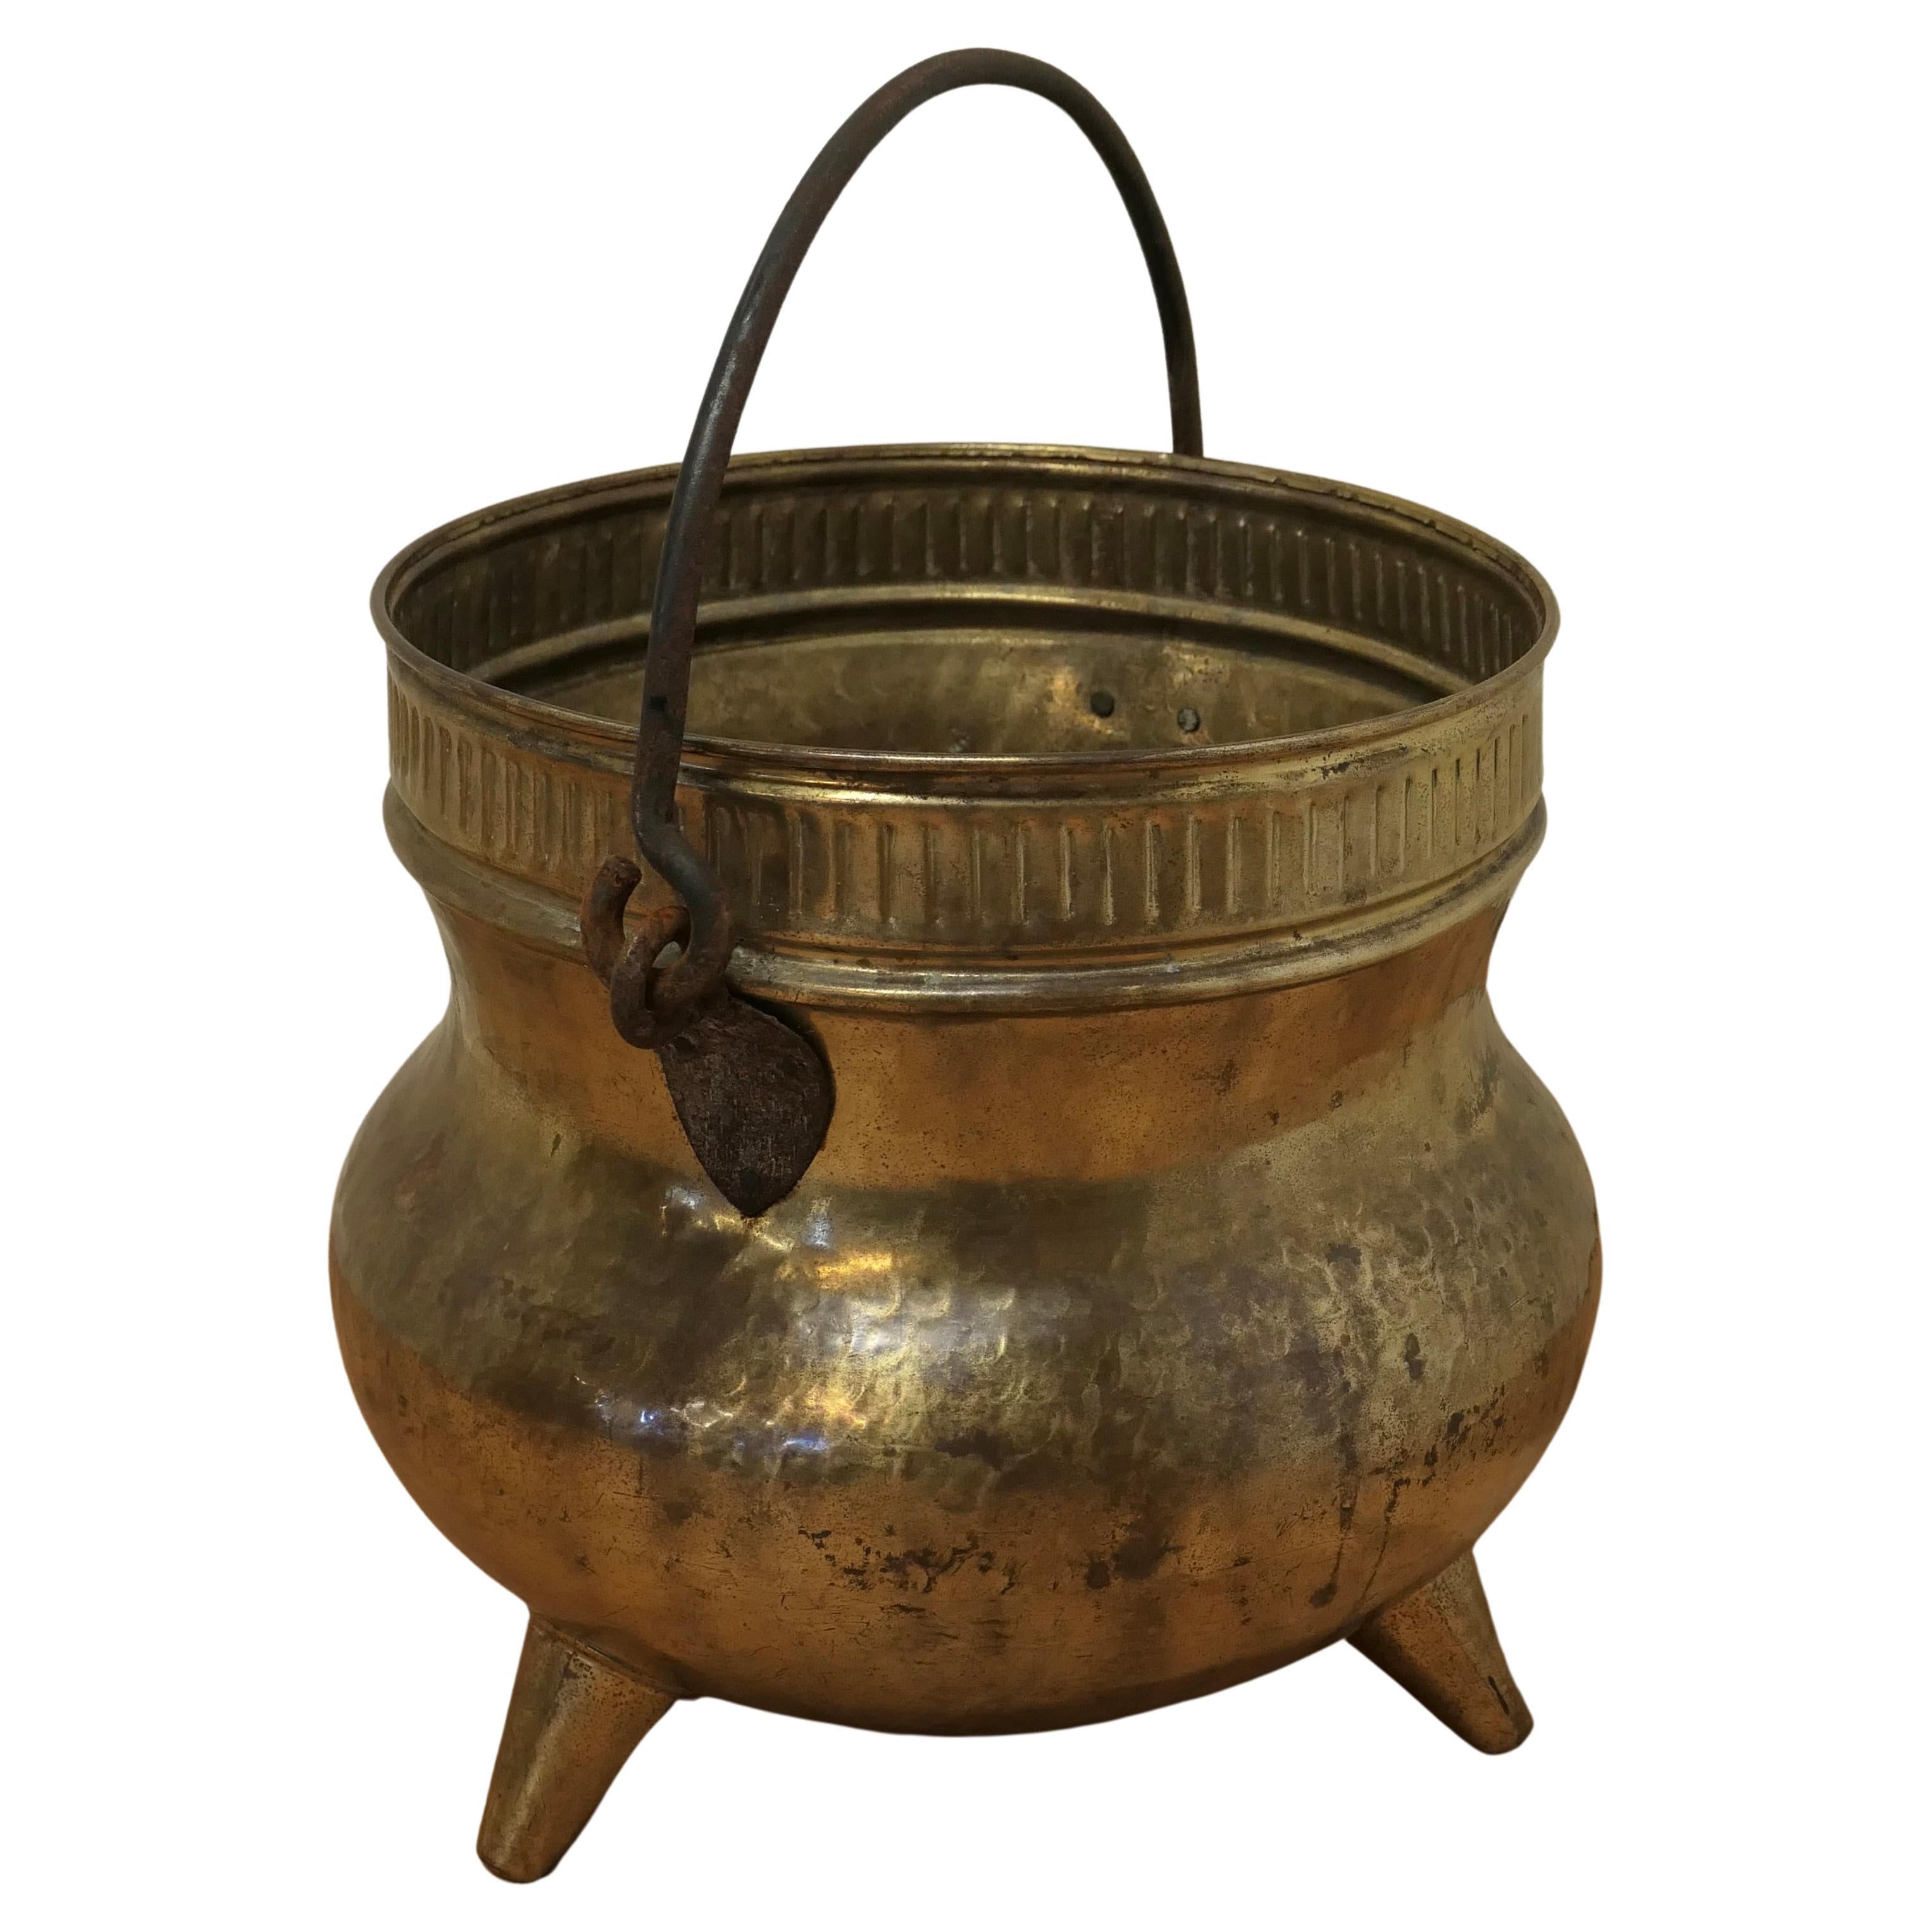 19th Century Pot Belly, Brass Coal Bucket on Feet